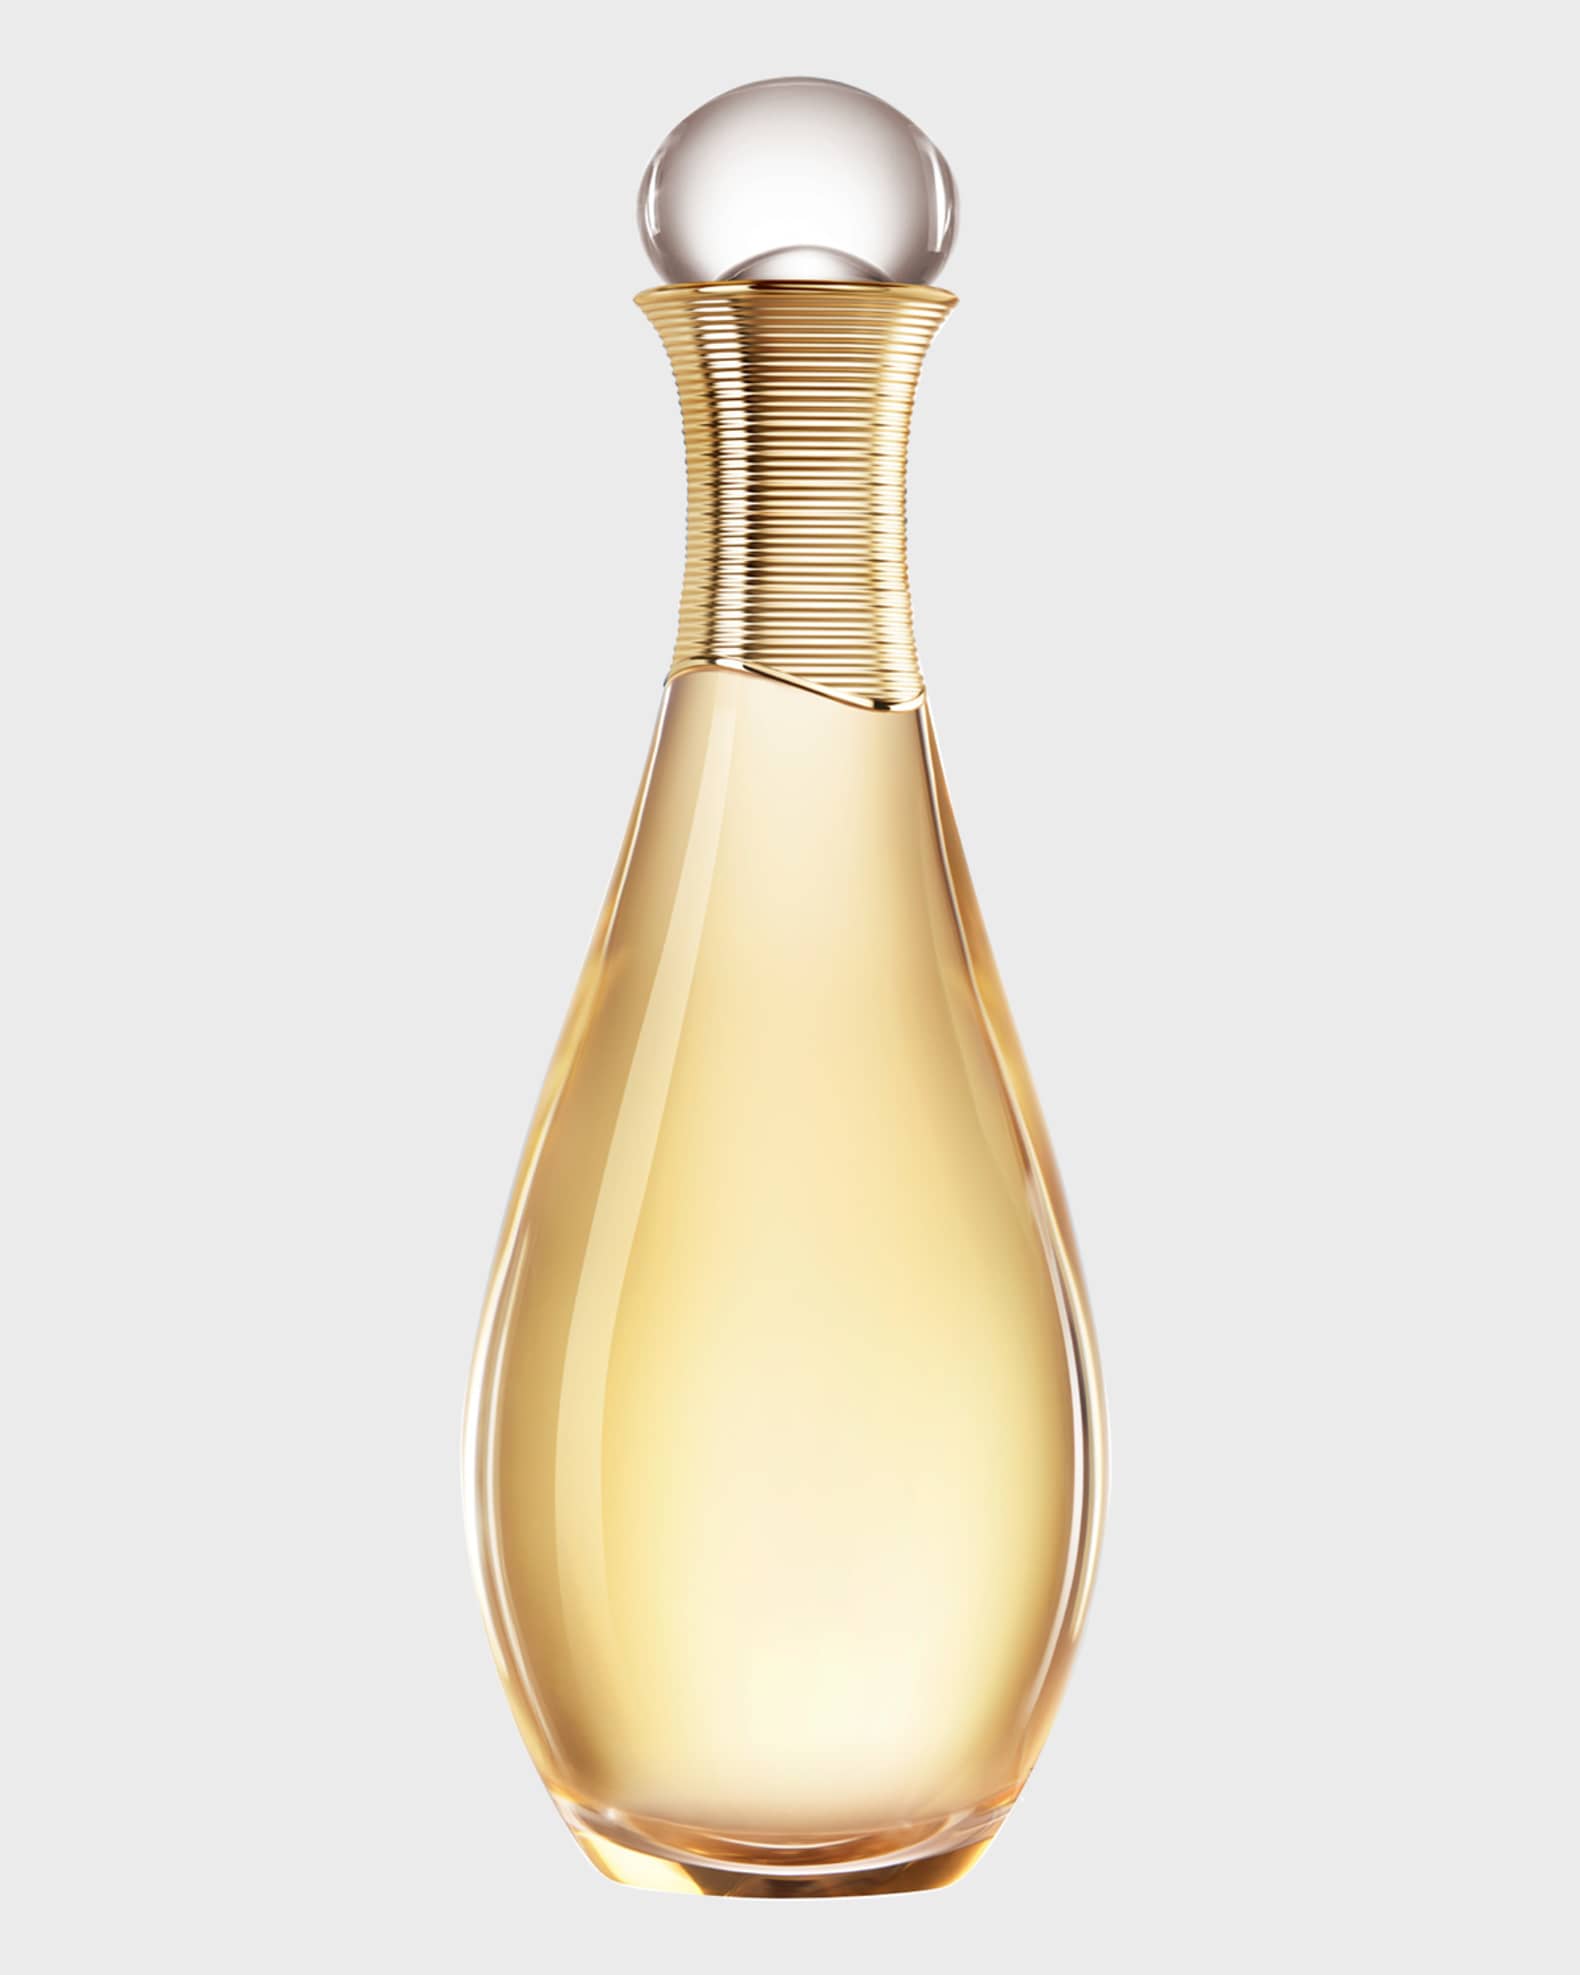 A bottle of Chanel No. 5 Elixir Sensuel perfume, revitalising